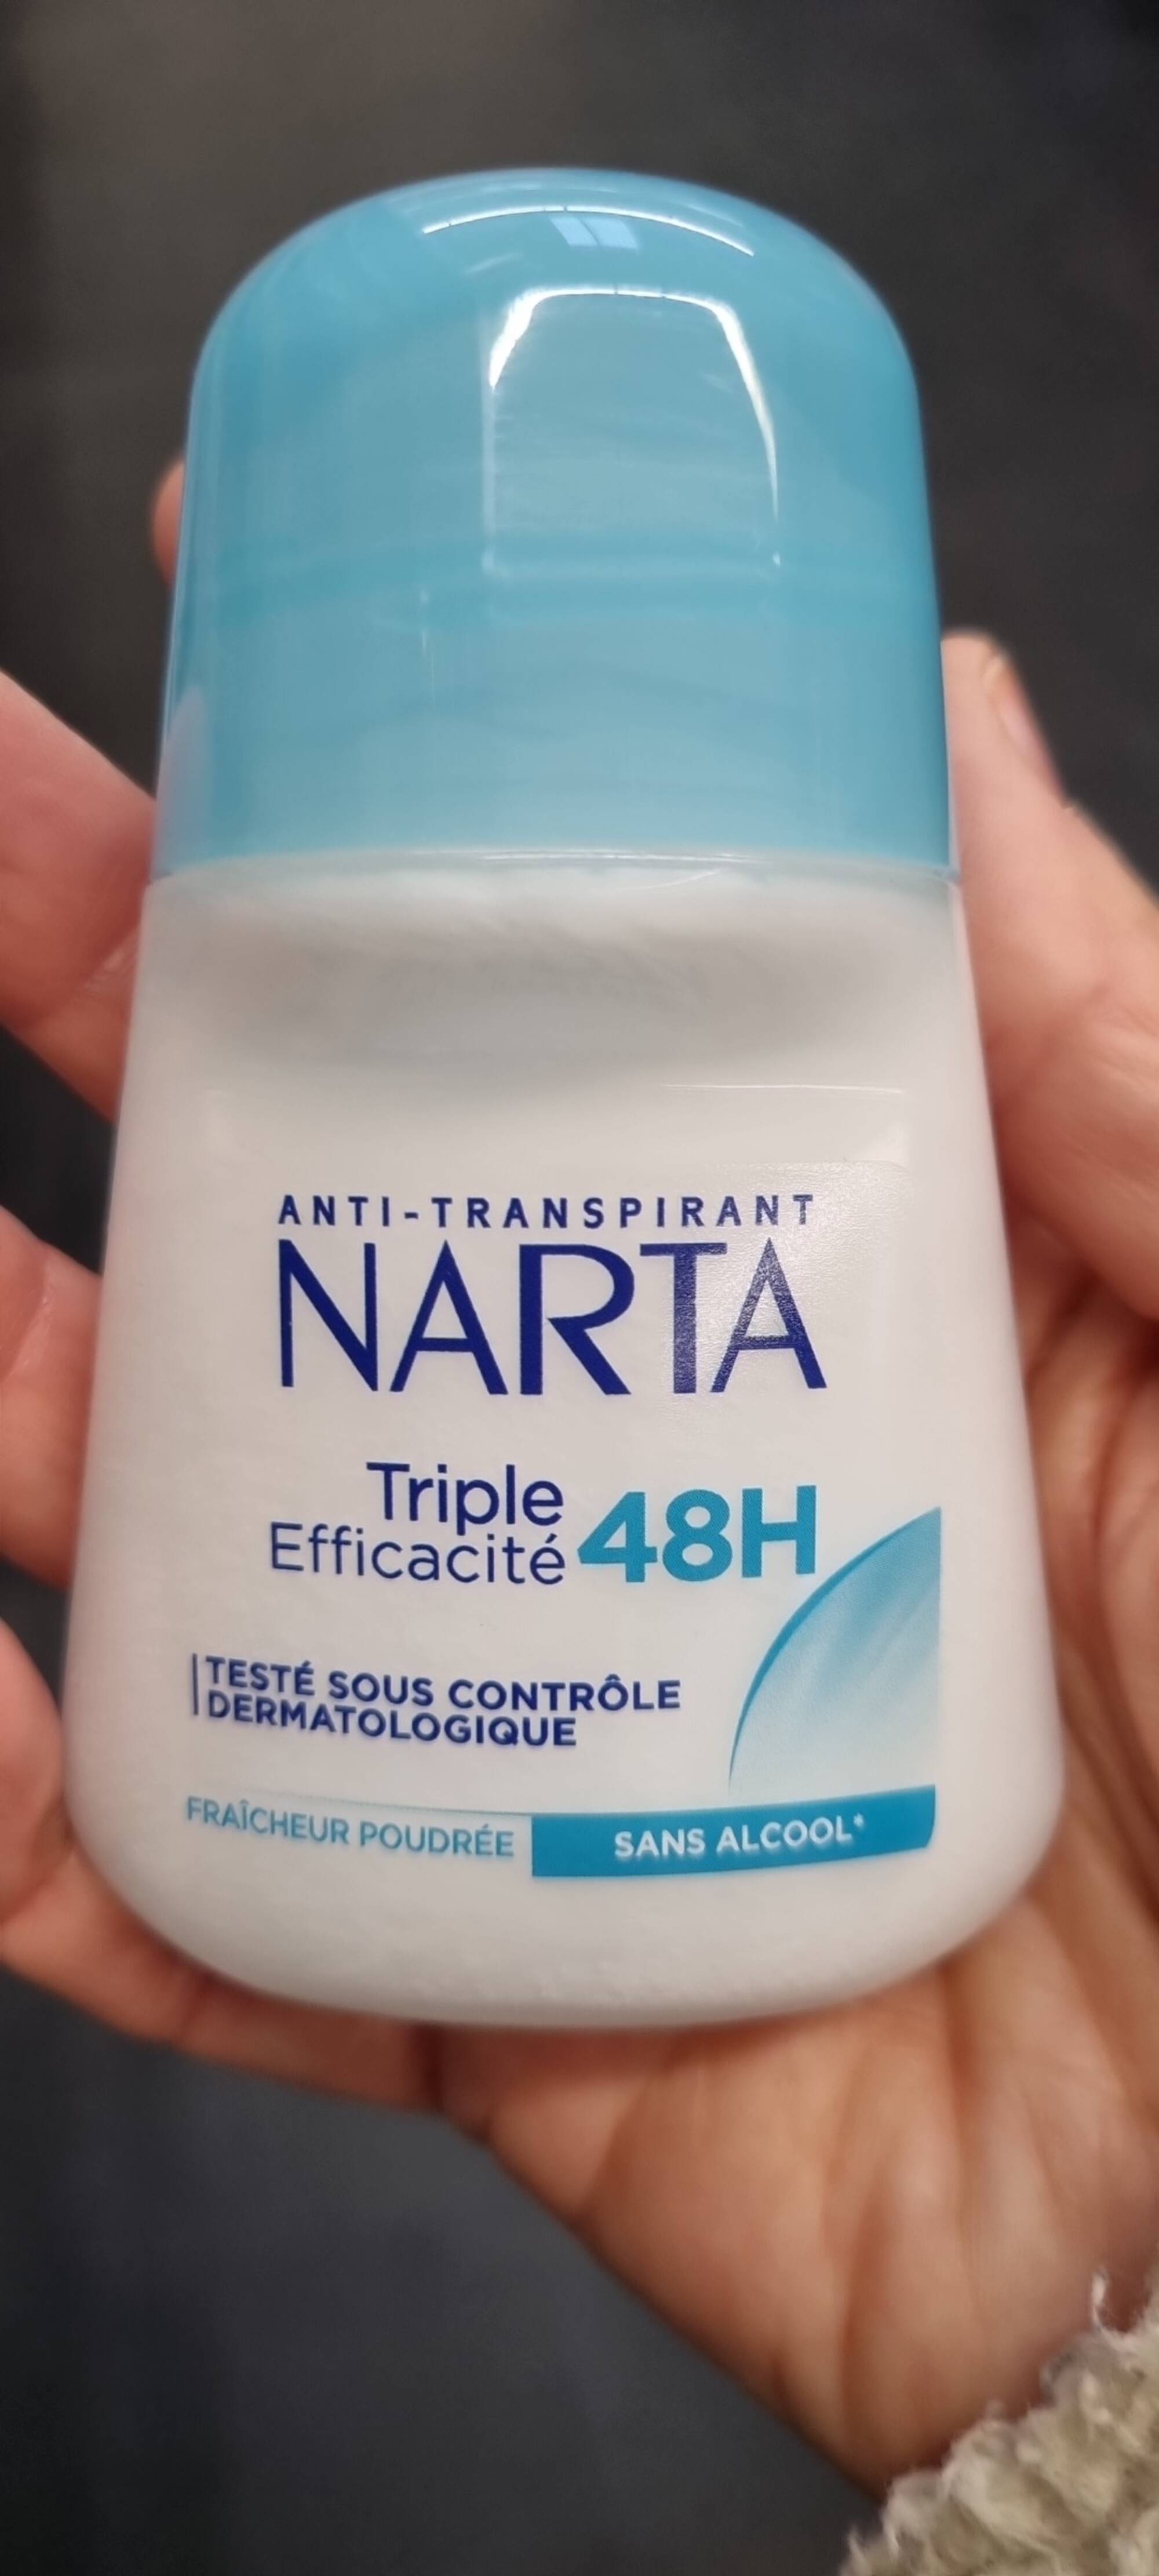 NARTA - Anti-transpirant triple éfficacité 48h